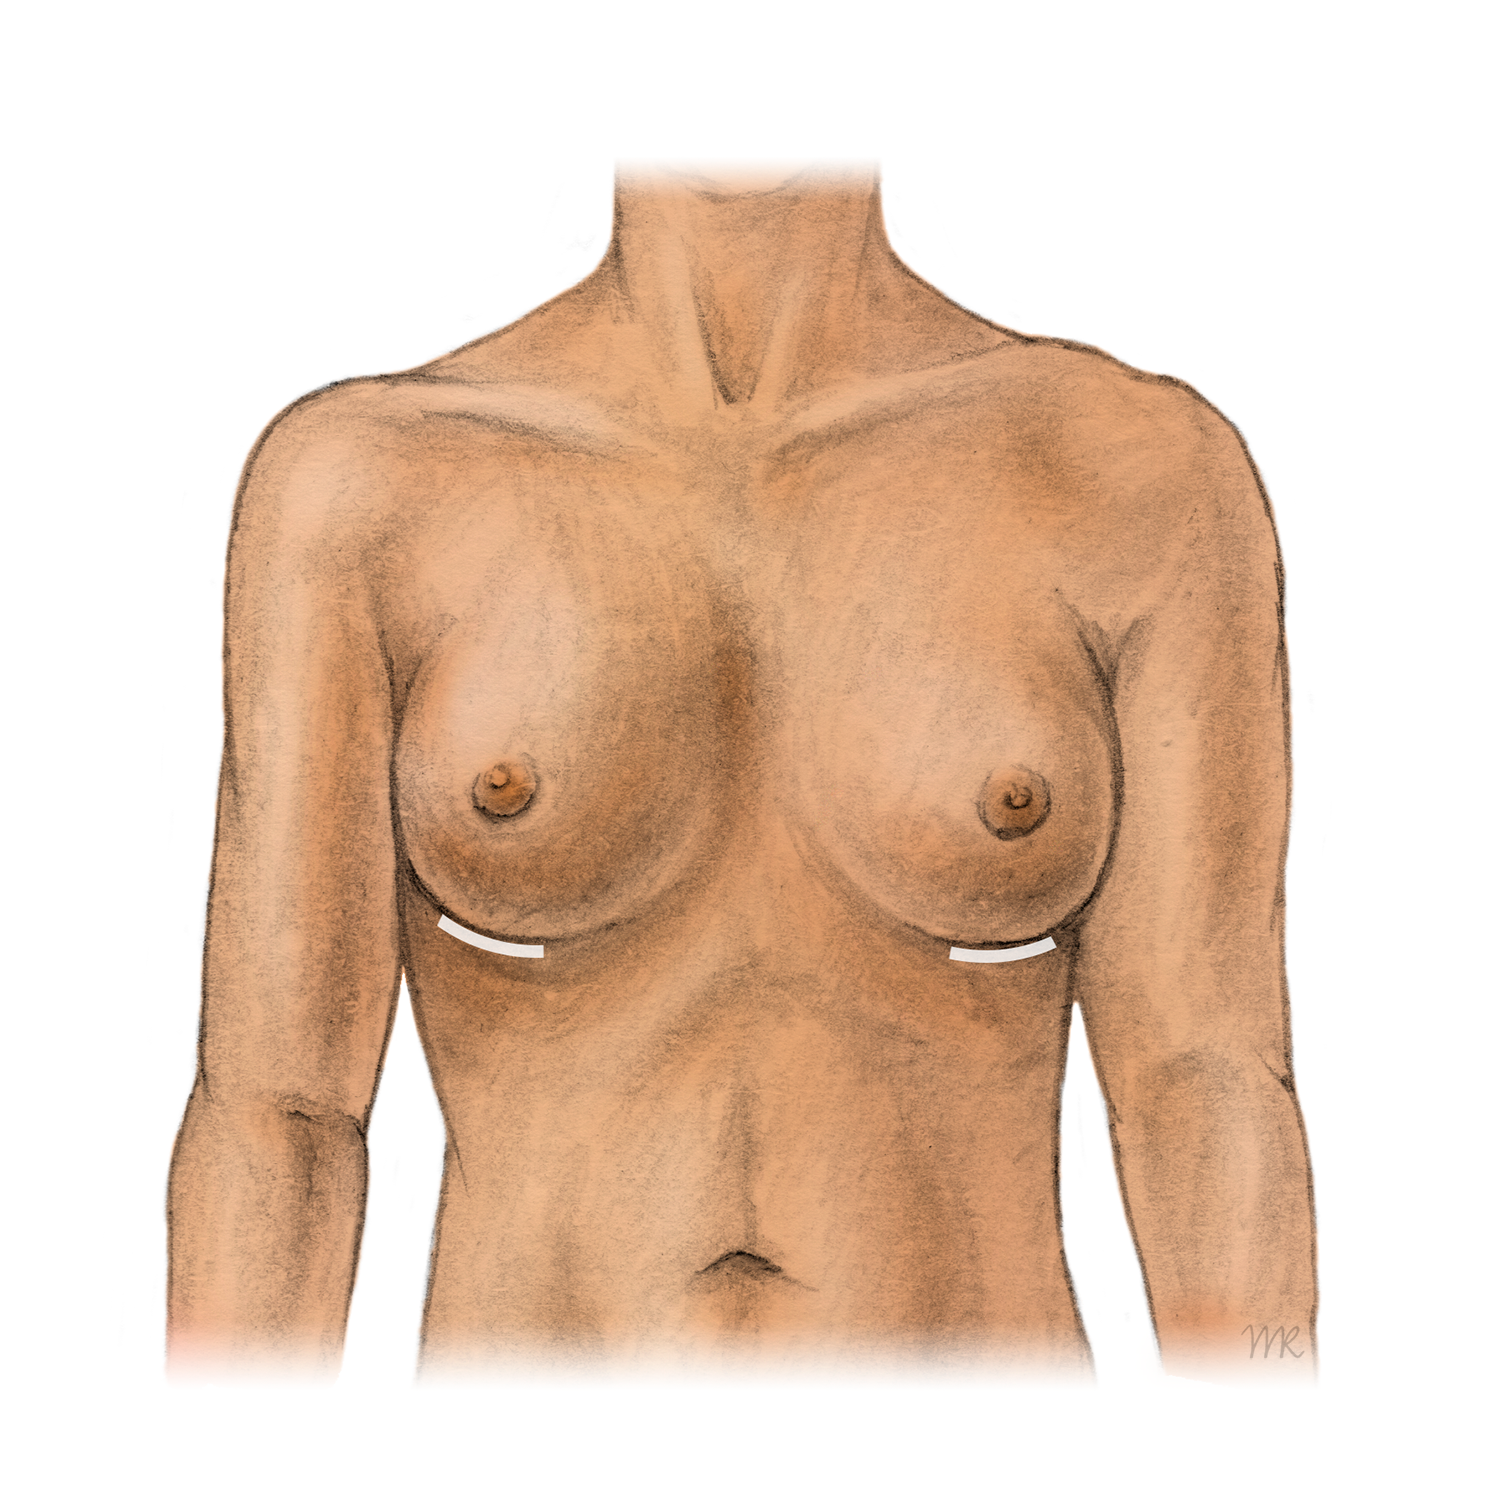 Brustvergrösserung mit Silikonimplantaten